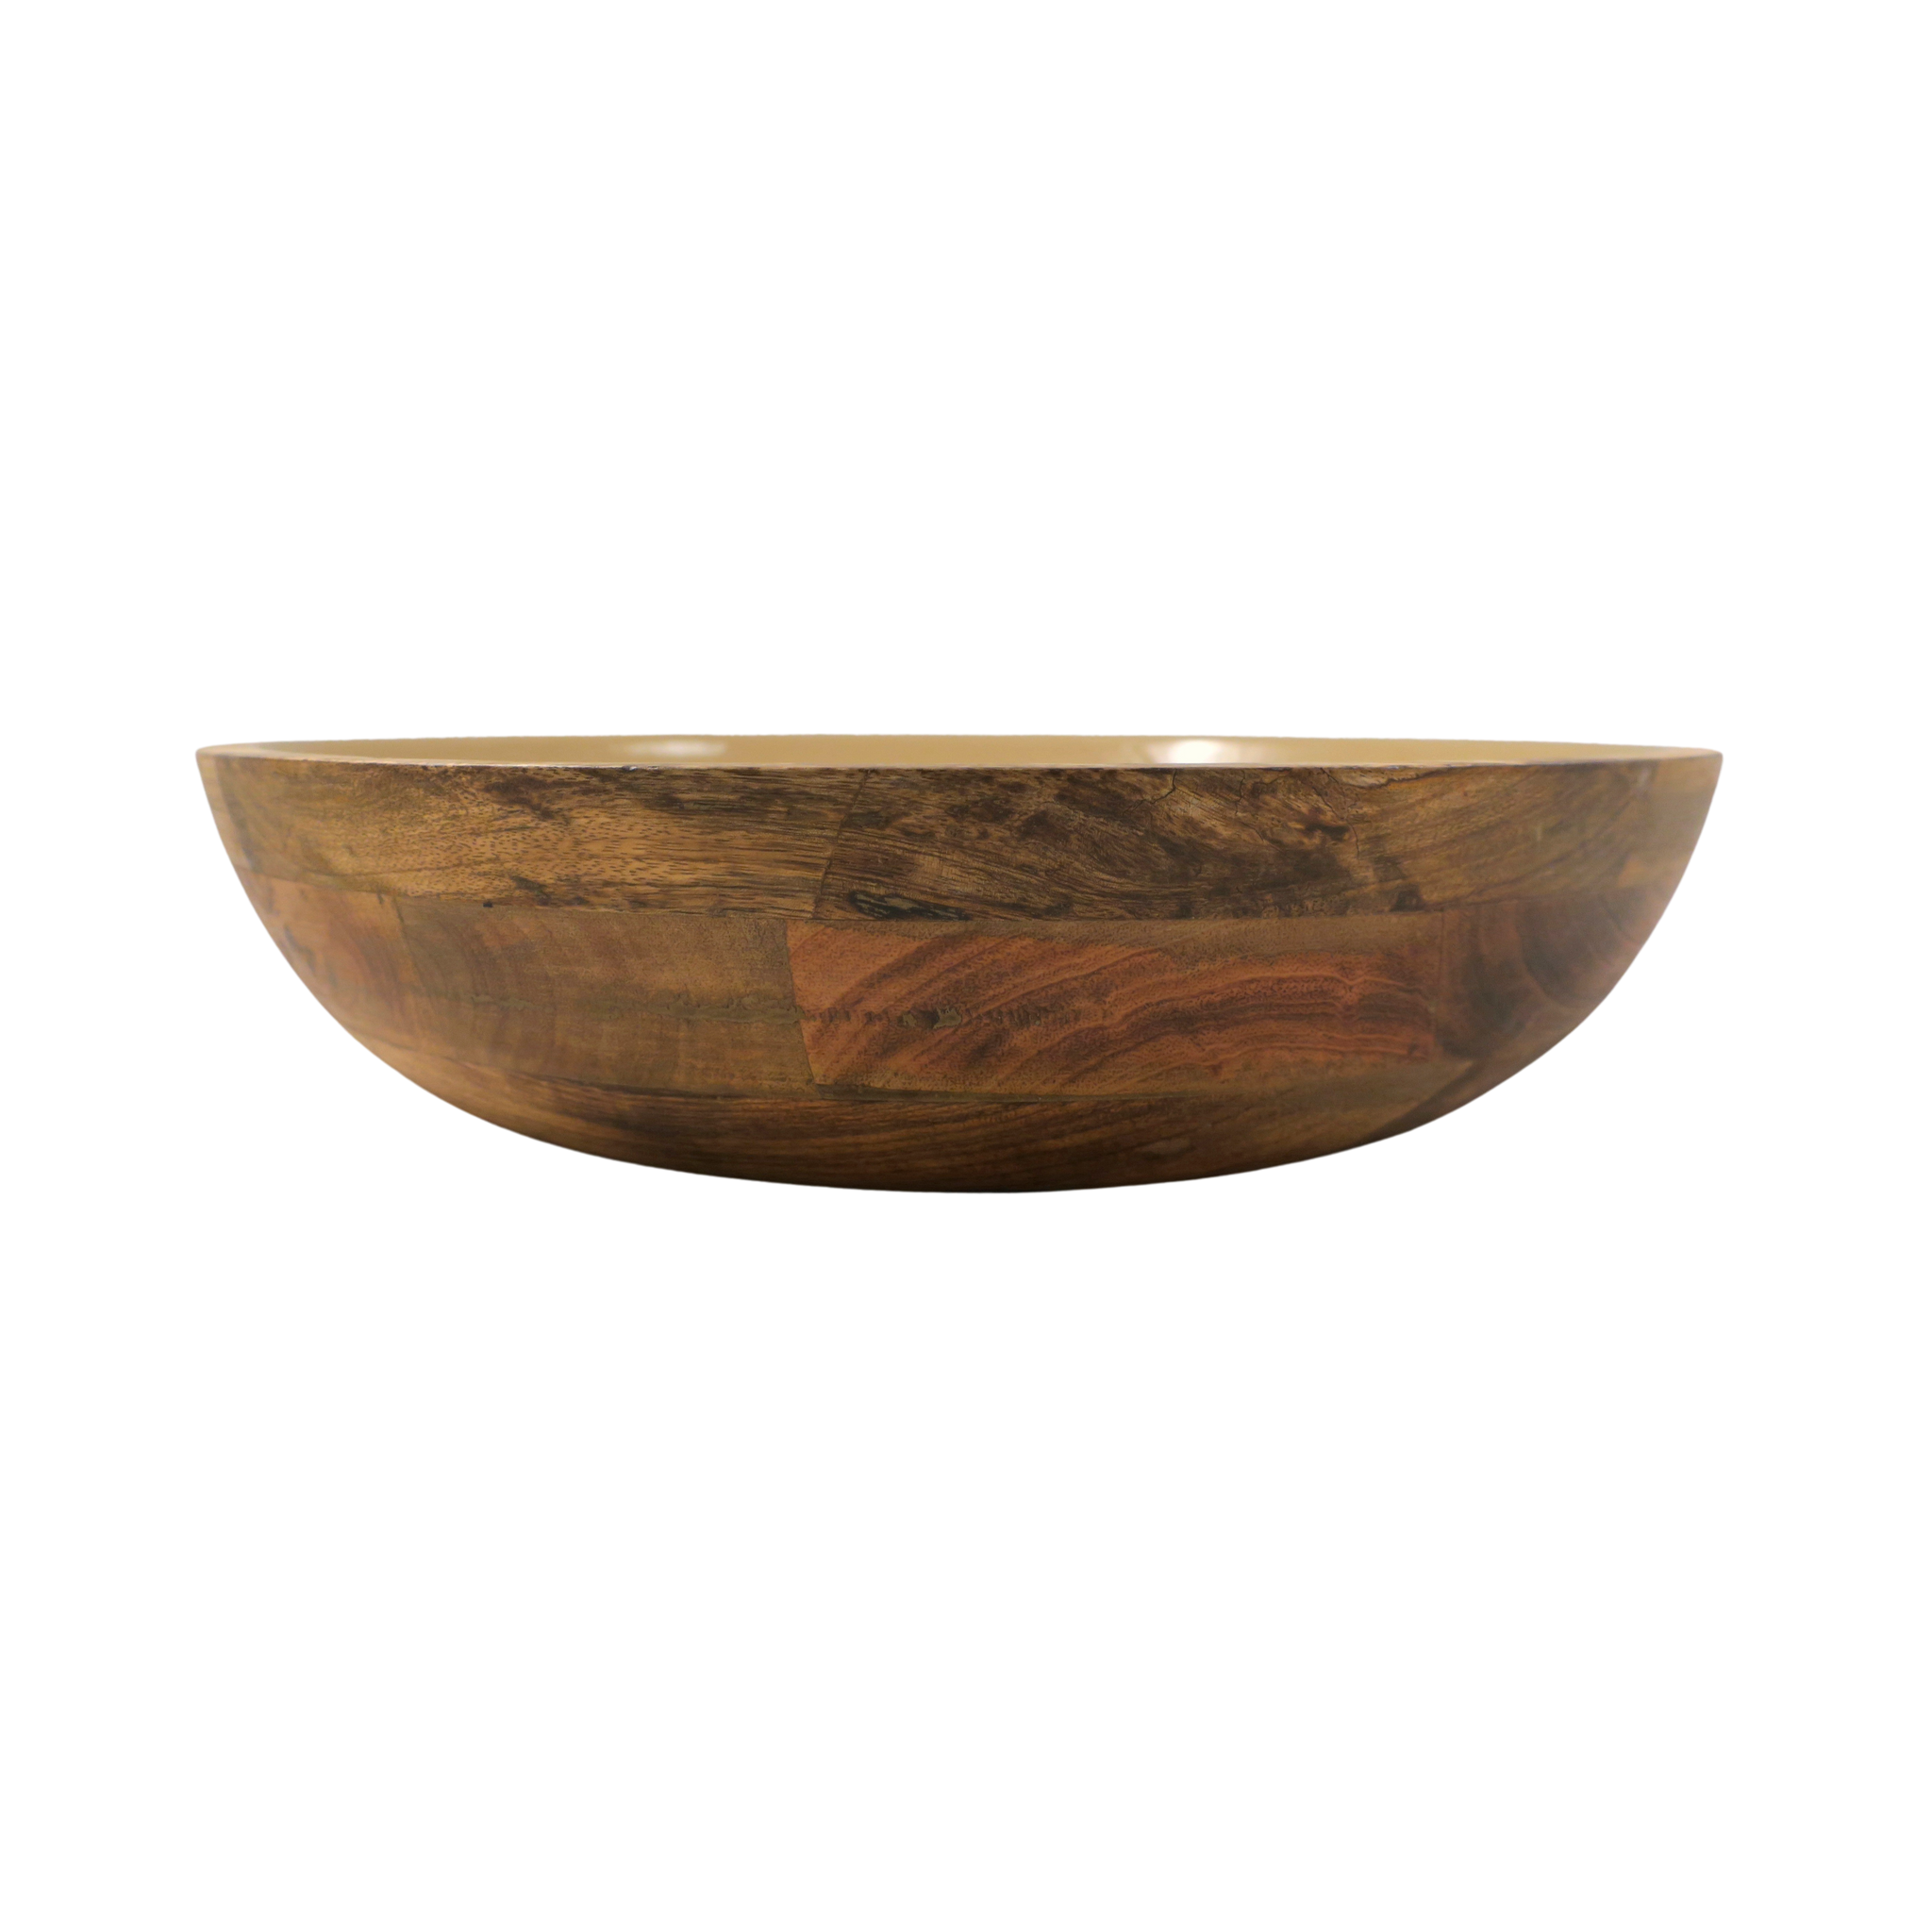 80061 ENAMEL Decorative bowl Diam.45cm